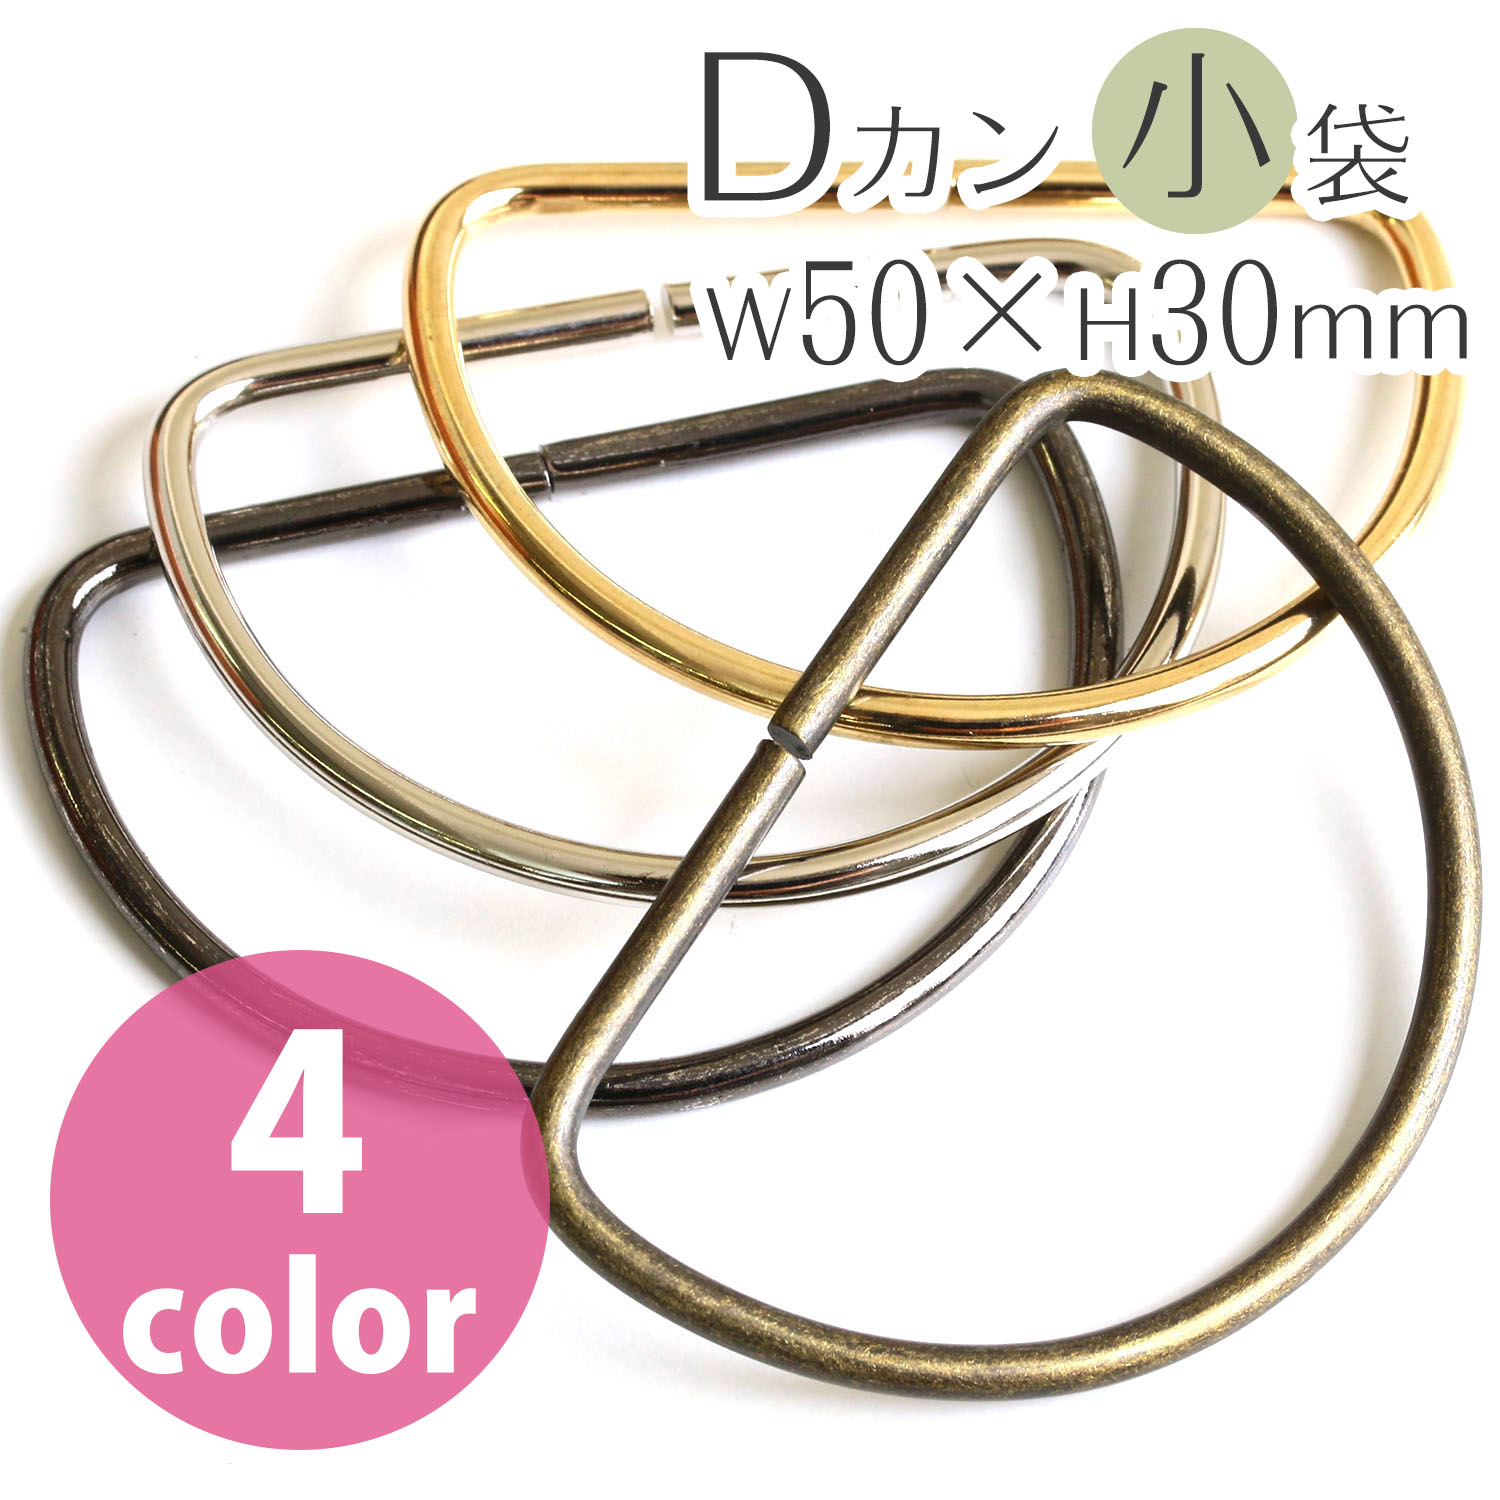 S22 D-Ring  50 x 30mm", diameter 3mm (bag)